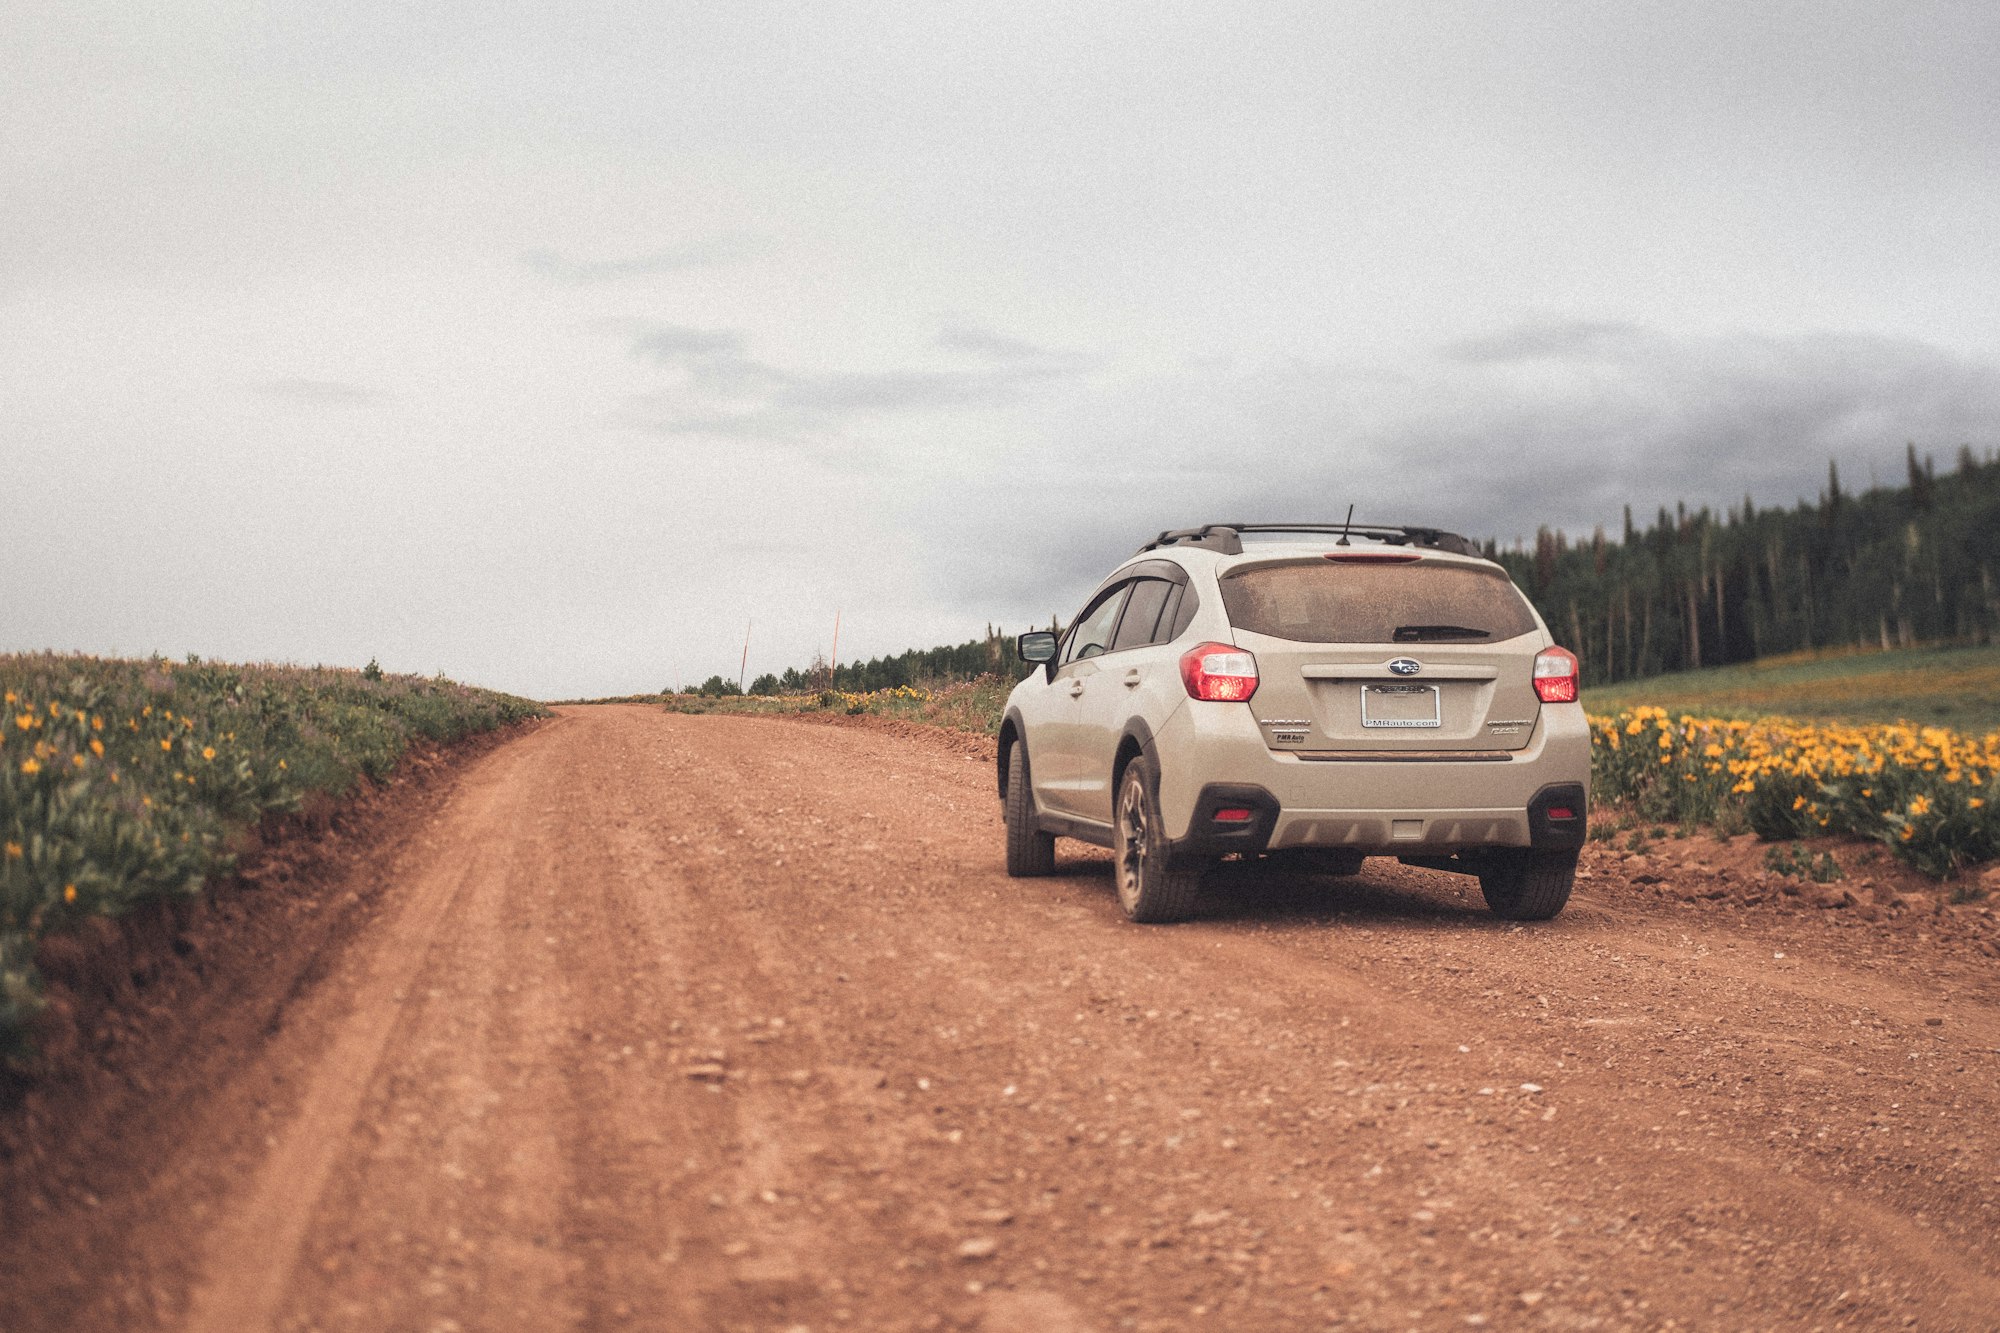 Subaru Snags Top Spot of Most-Seen Auto TV Ads